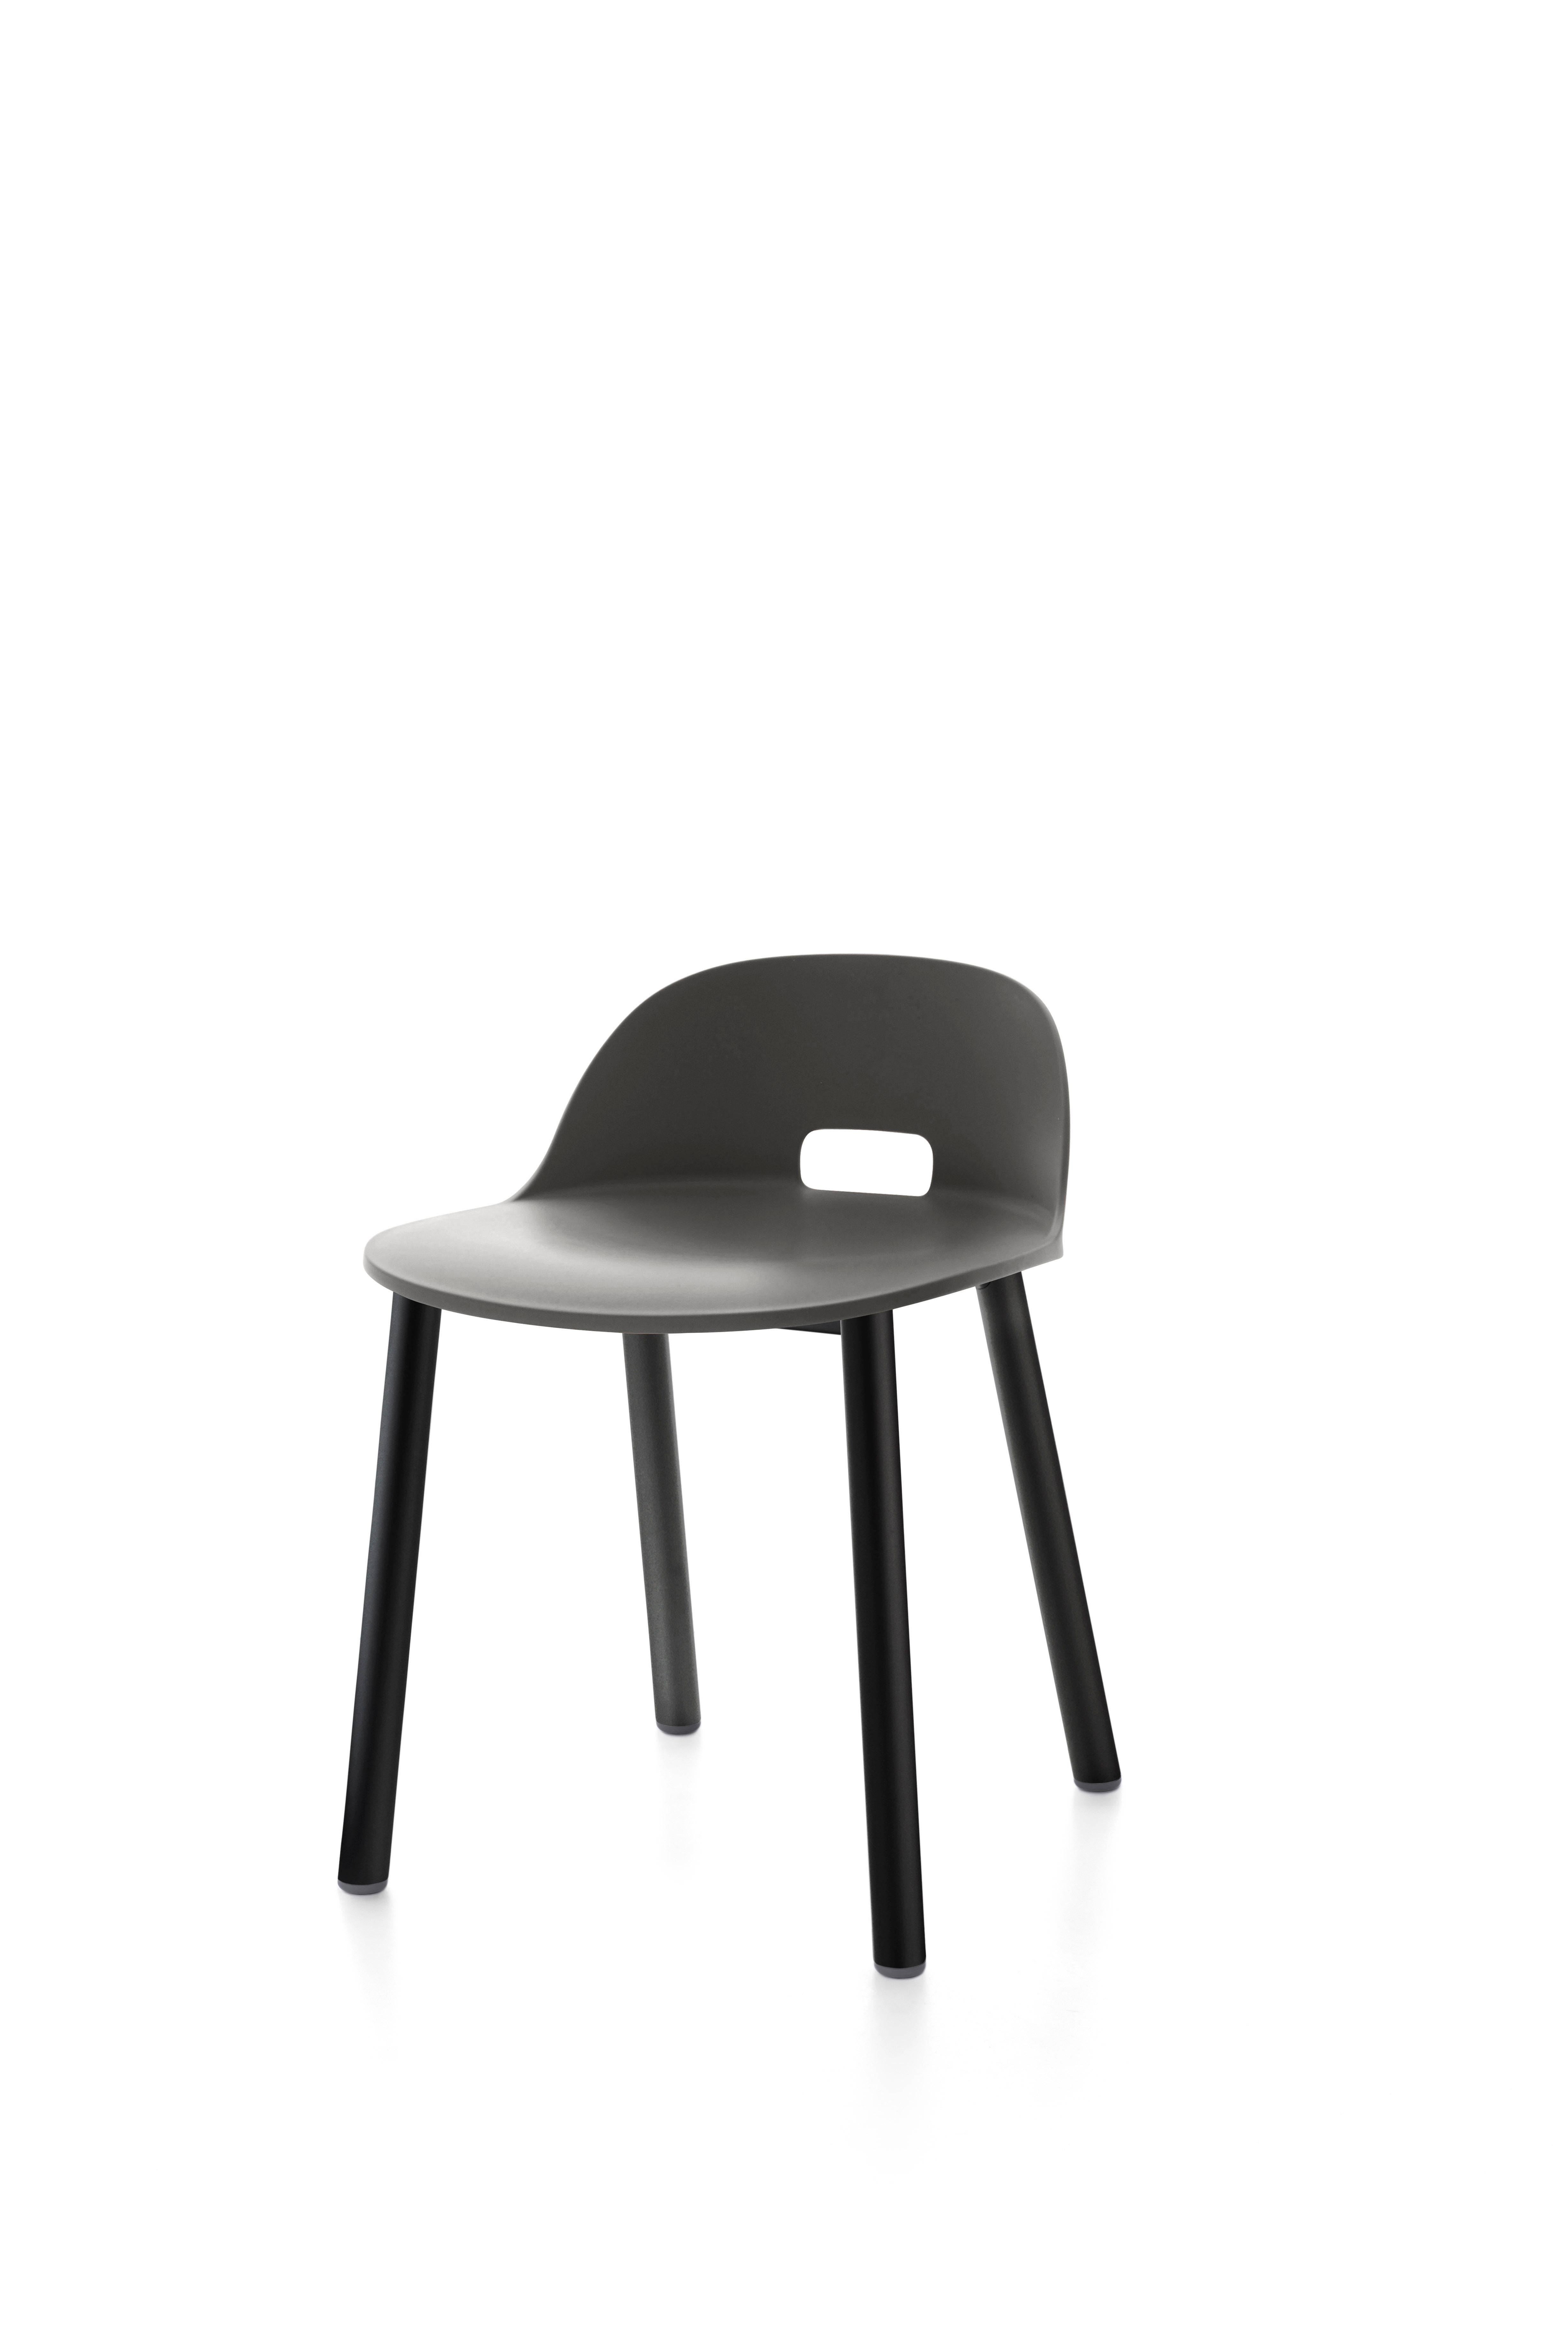 For Sale: Gray (Alfi Dark Grey) Emeco Alfi Low Back Chair with Black Powder-Coated Aluminum Frame by Jasper